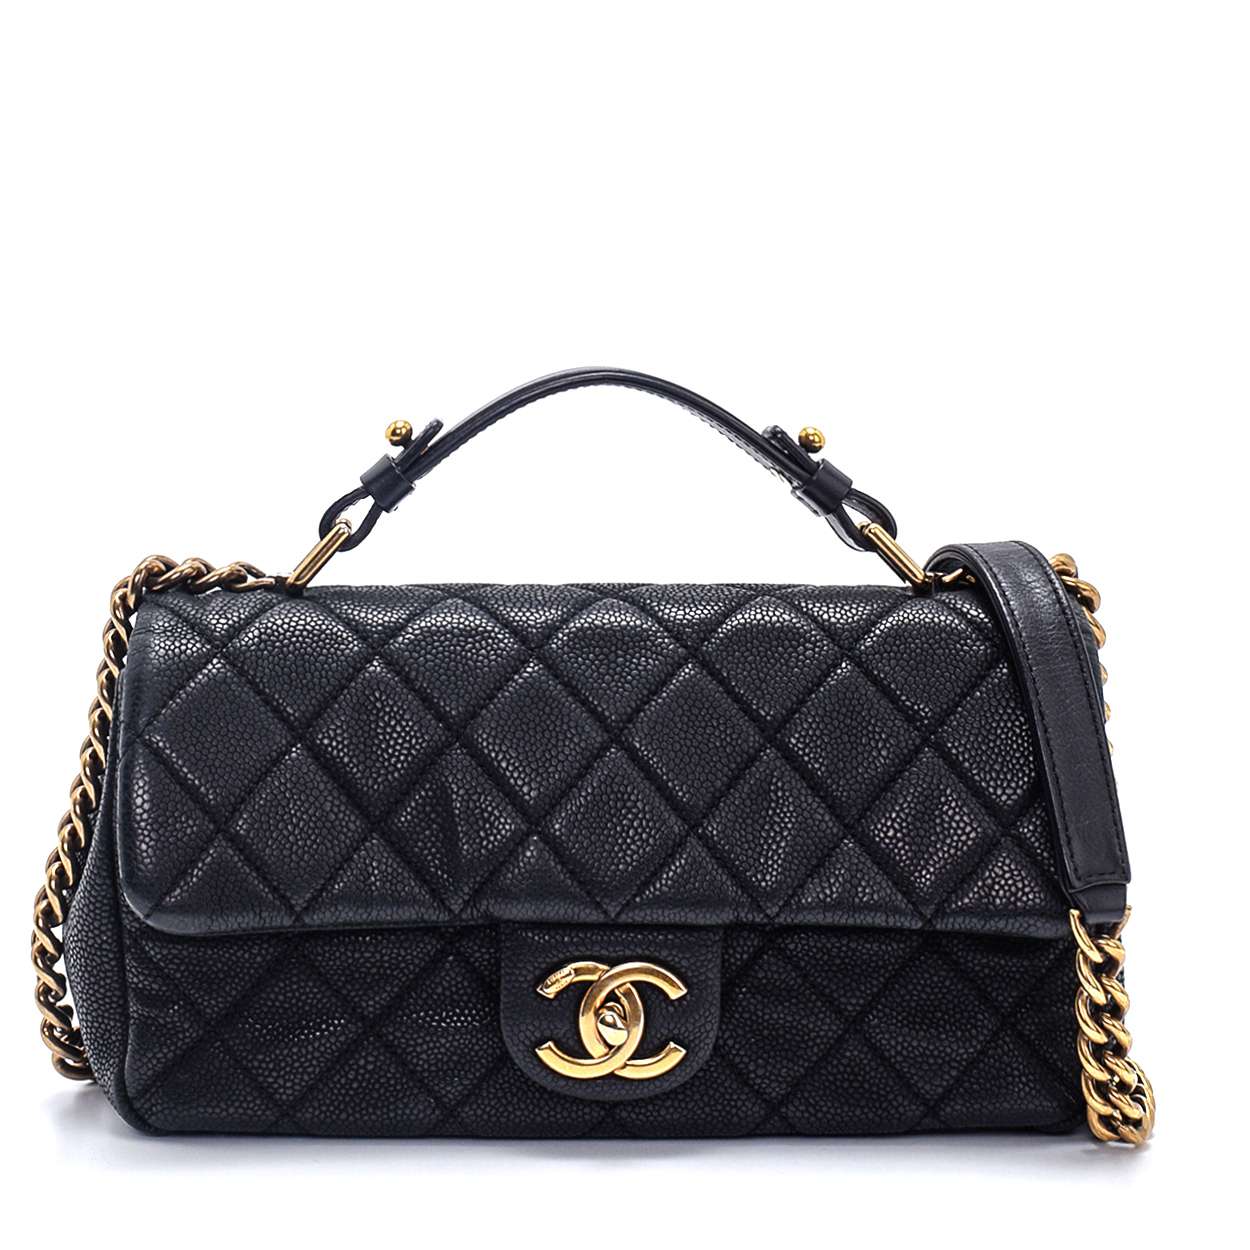 Chanel - Black Quilted Caviar Leather Medium Handbag and Crossbody Bag